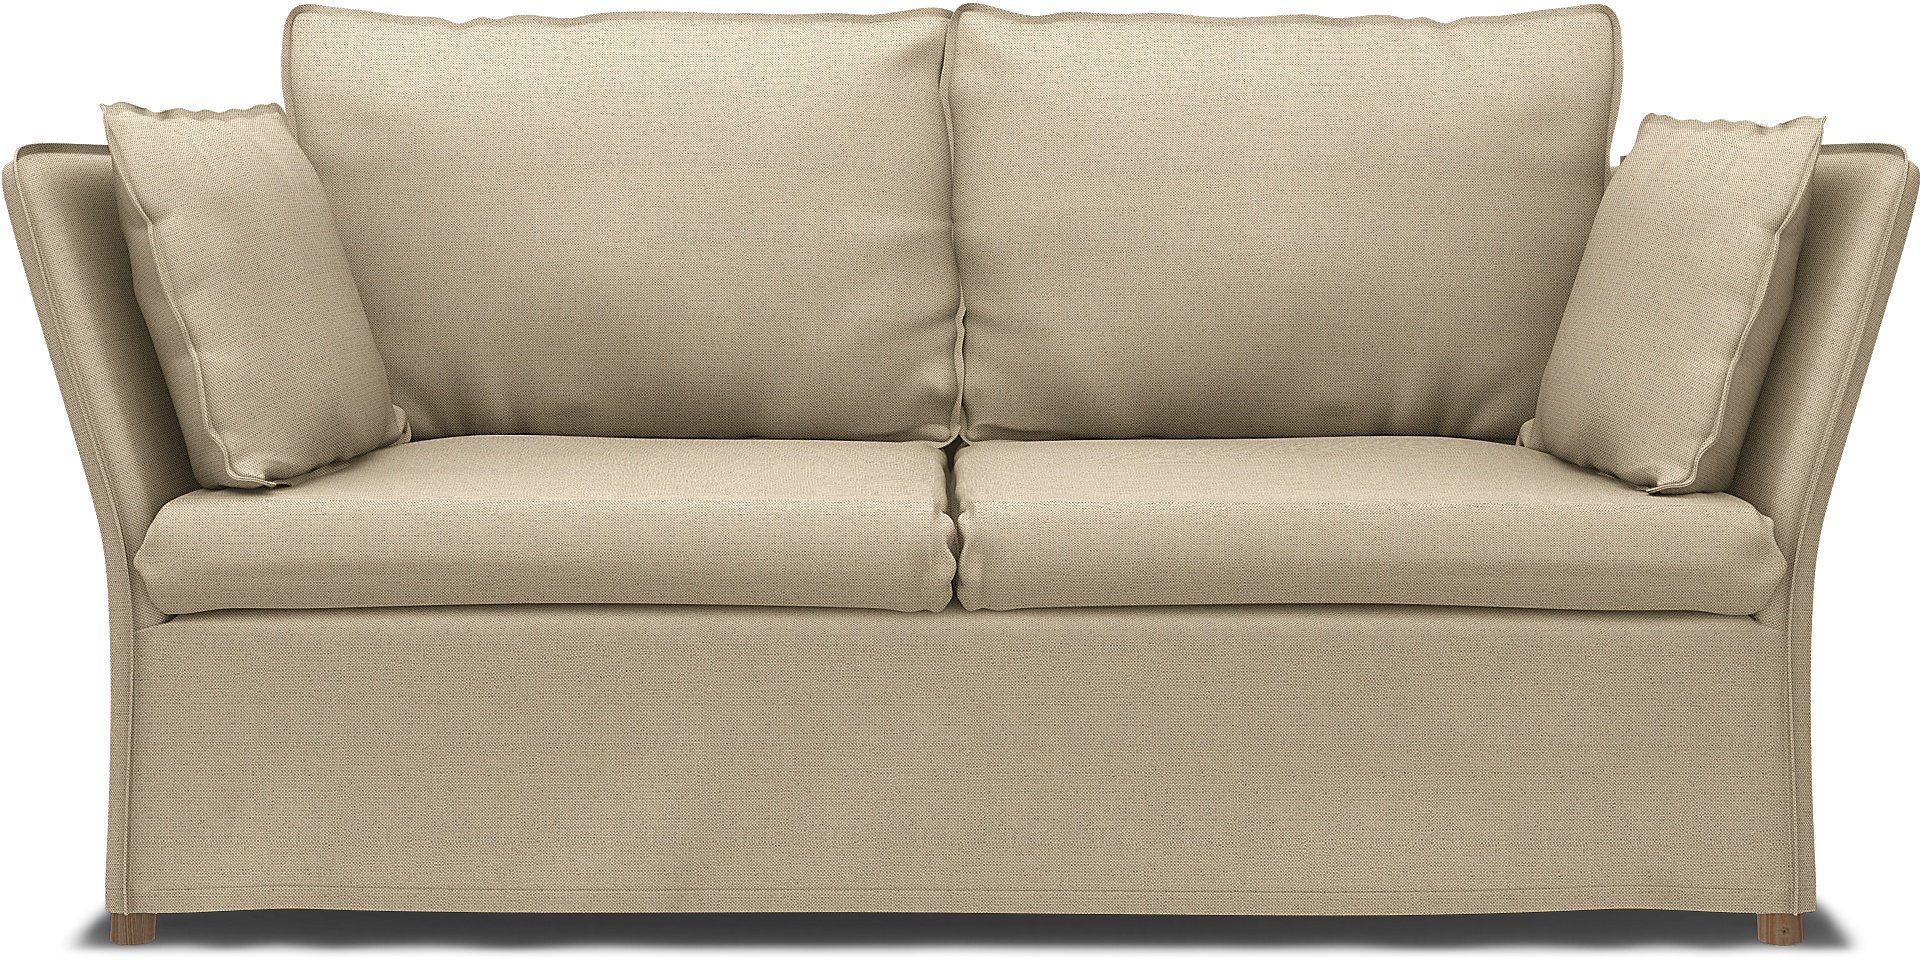 IKEA - Backsalen 2 seater sofa, Unbleached, Linen - Bemz